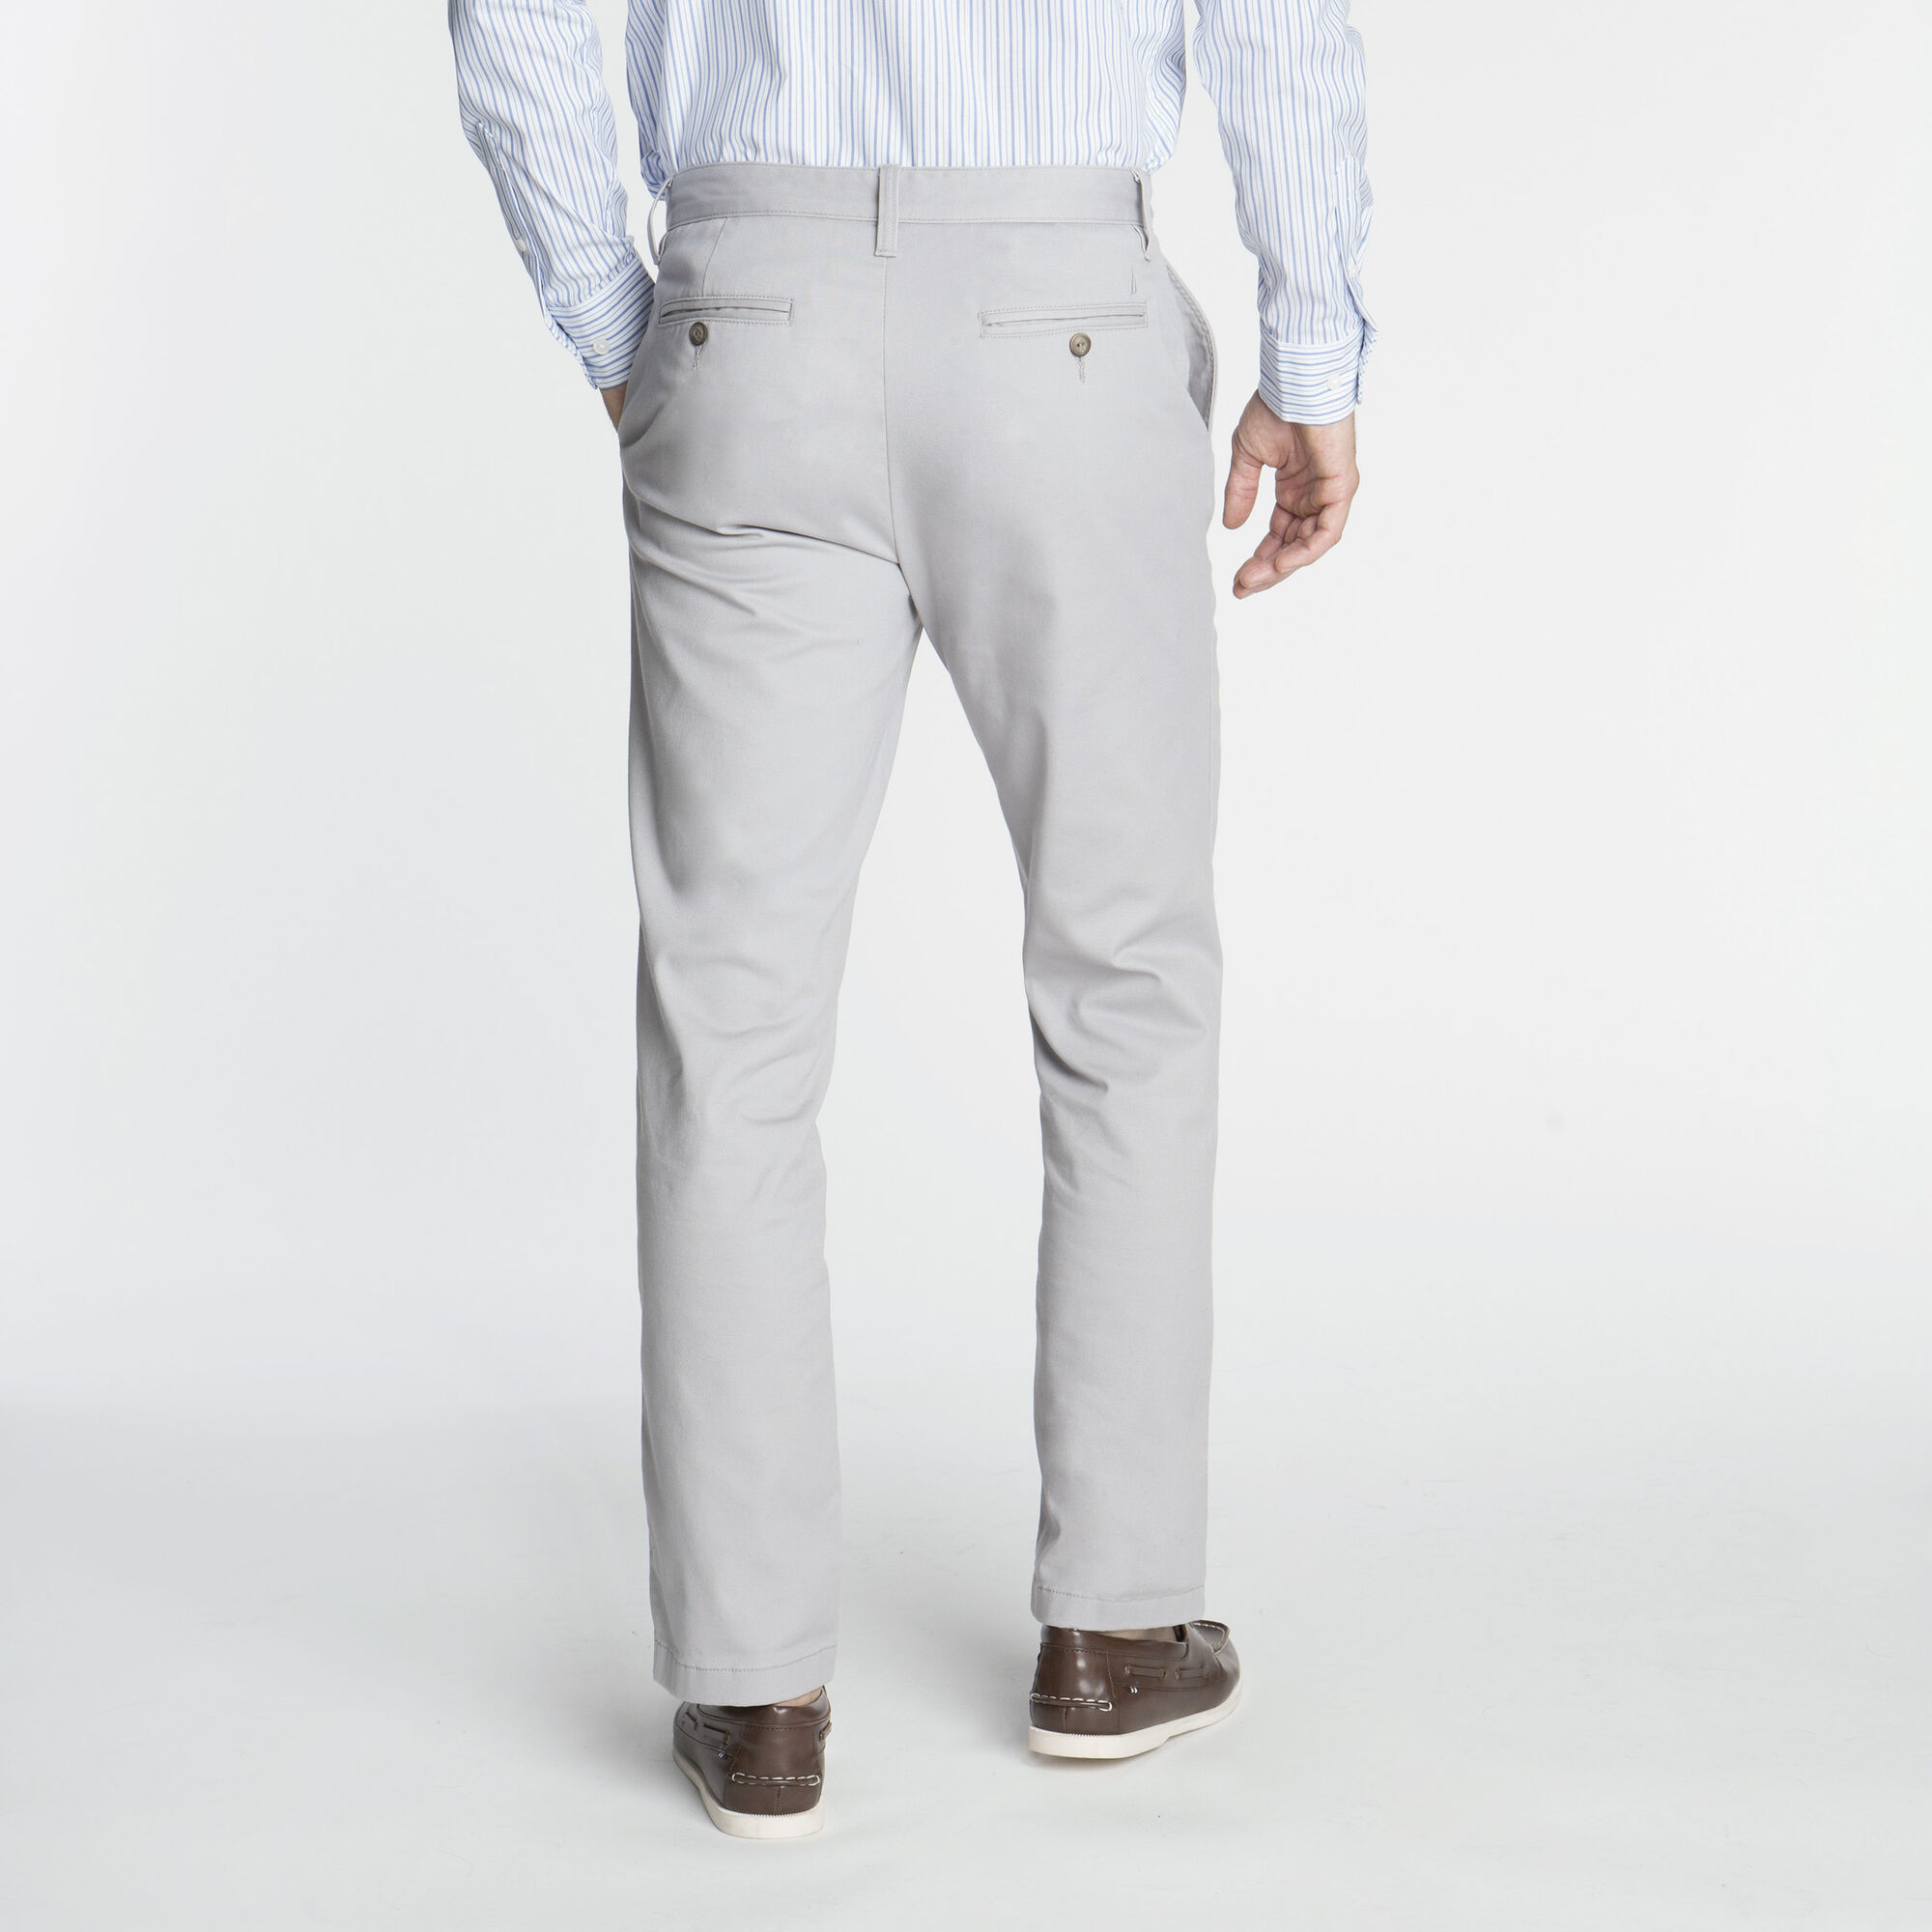 Nautica Mens Classic Fit Wrinkle-Resistant Pant | eBay